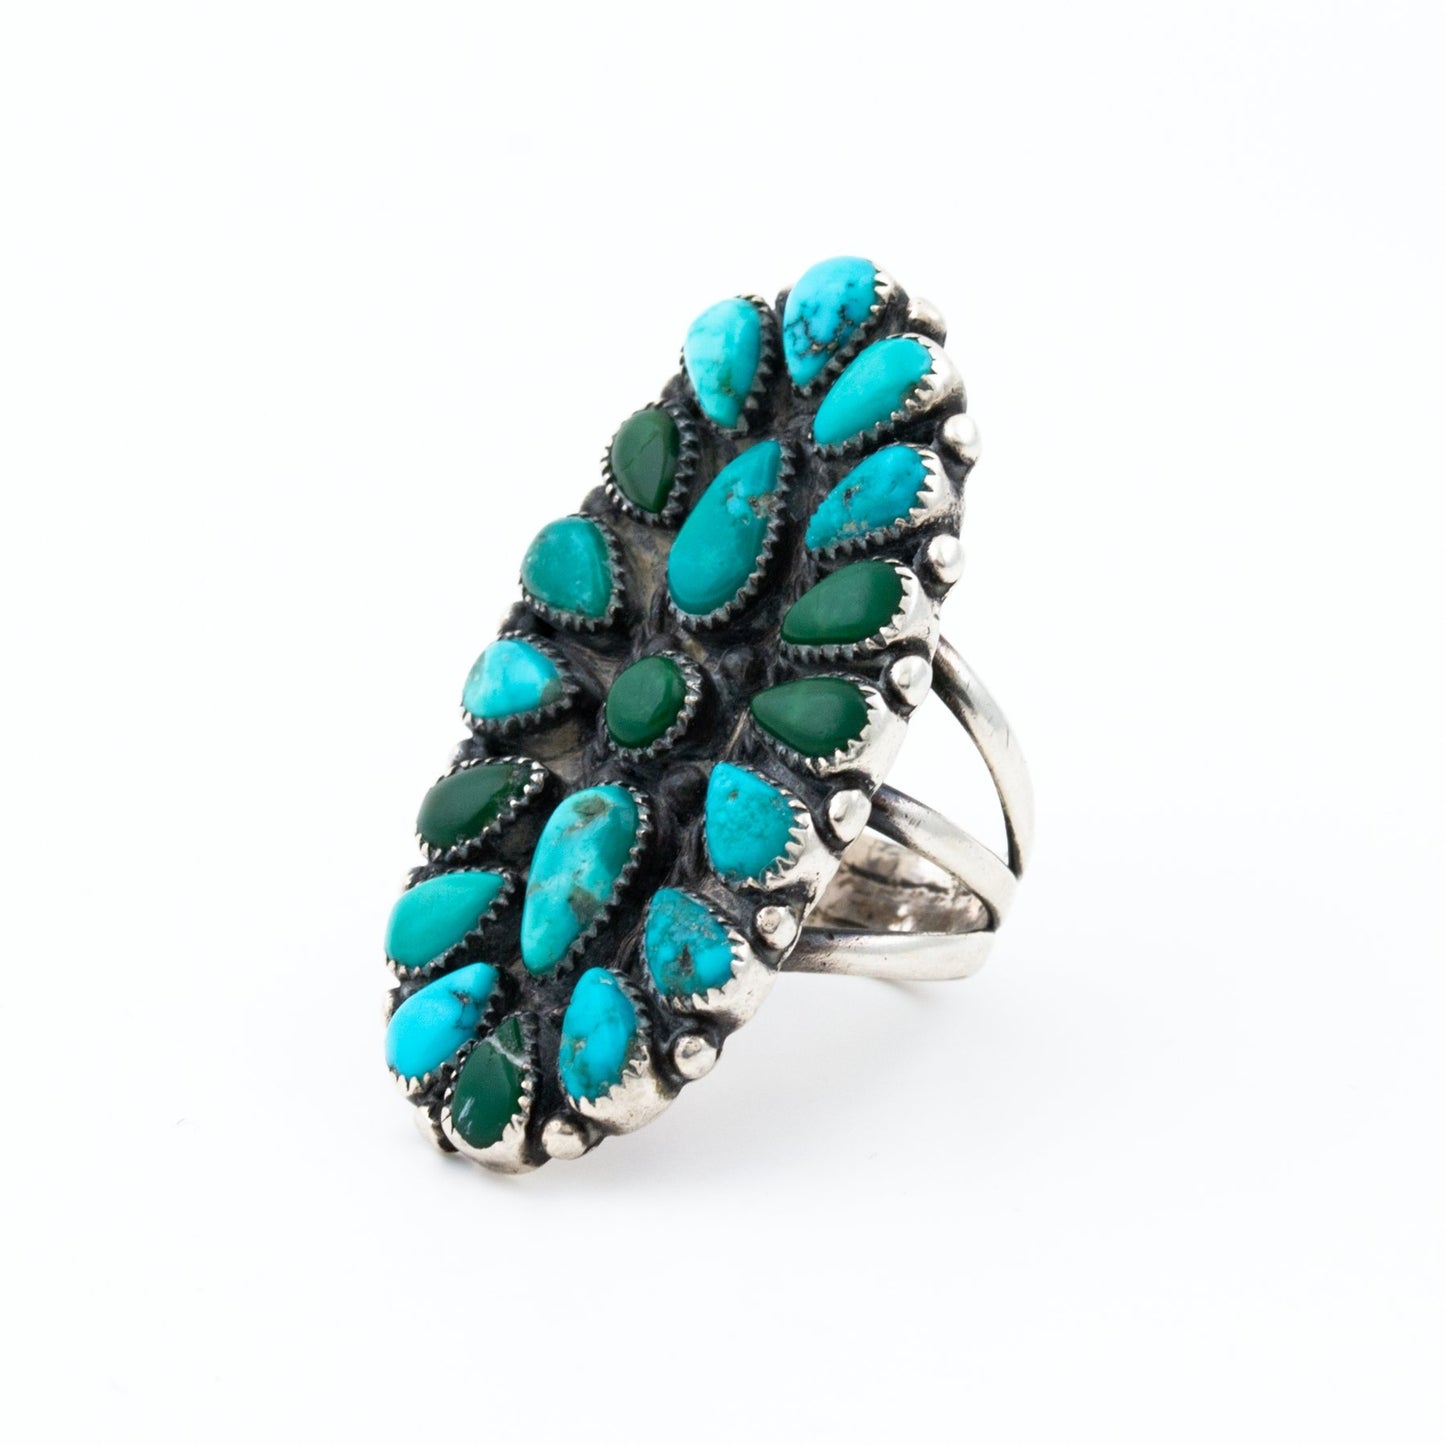 1940s Needlepoint Turquoise Ring - Kingdom Jewelry